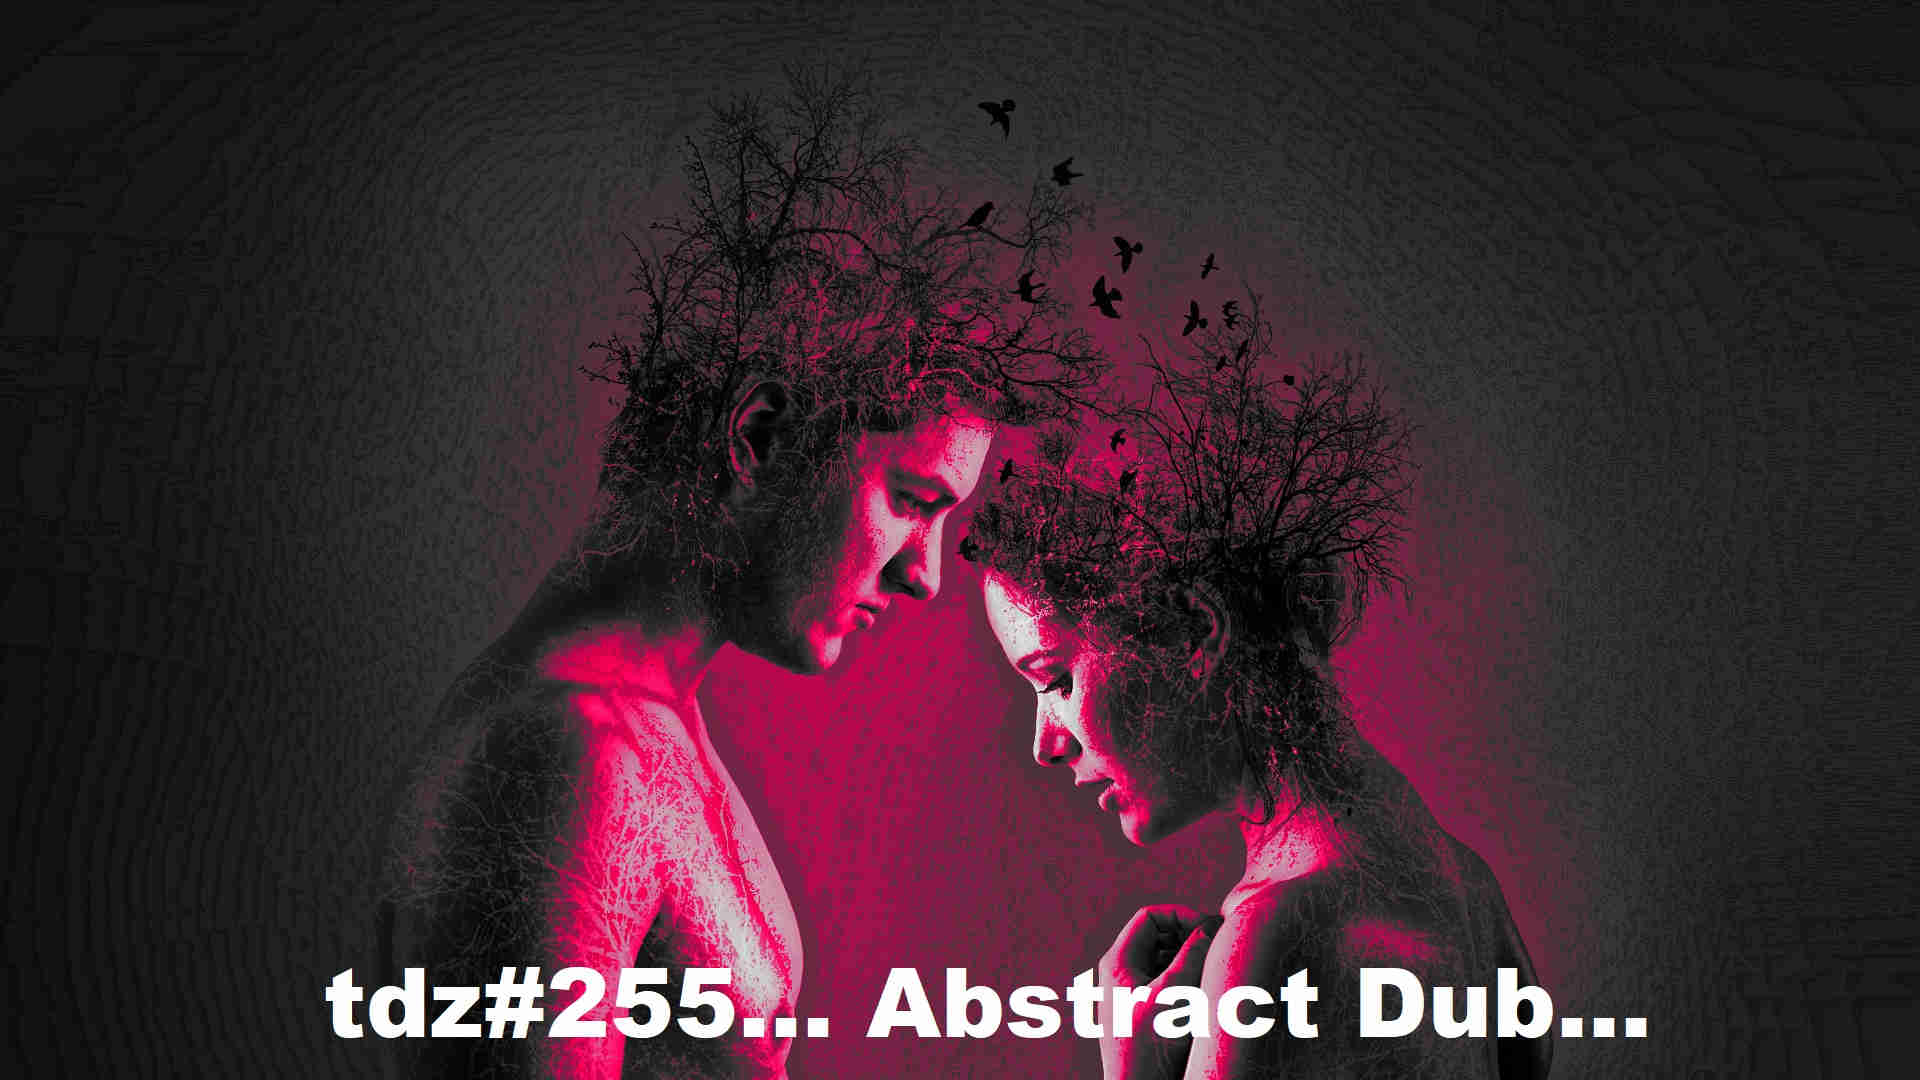 TDZ#255... Abstract Dub...